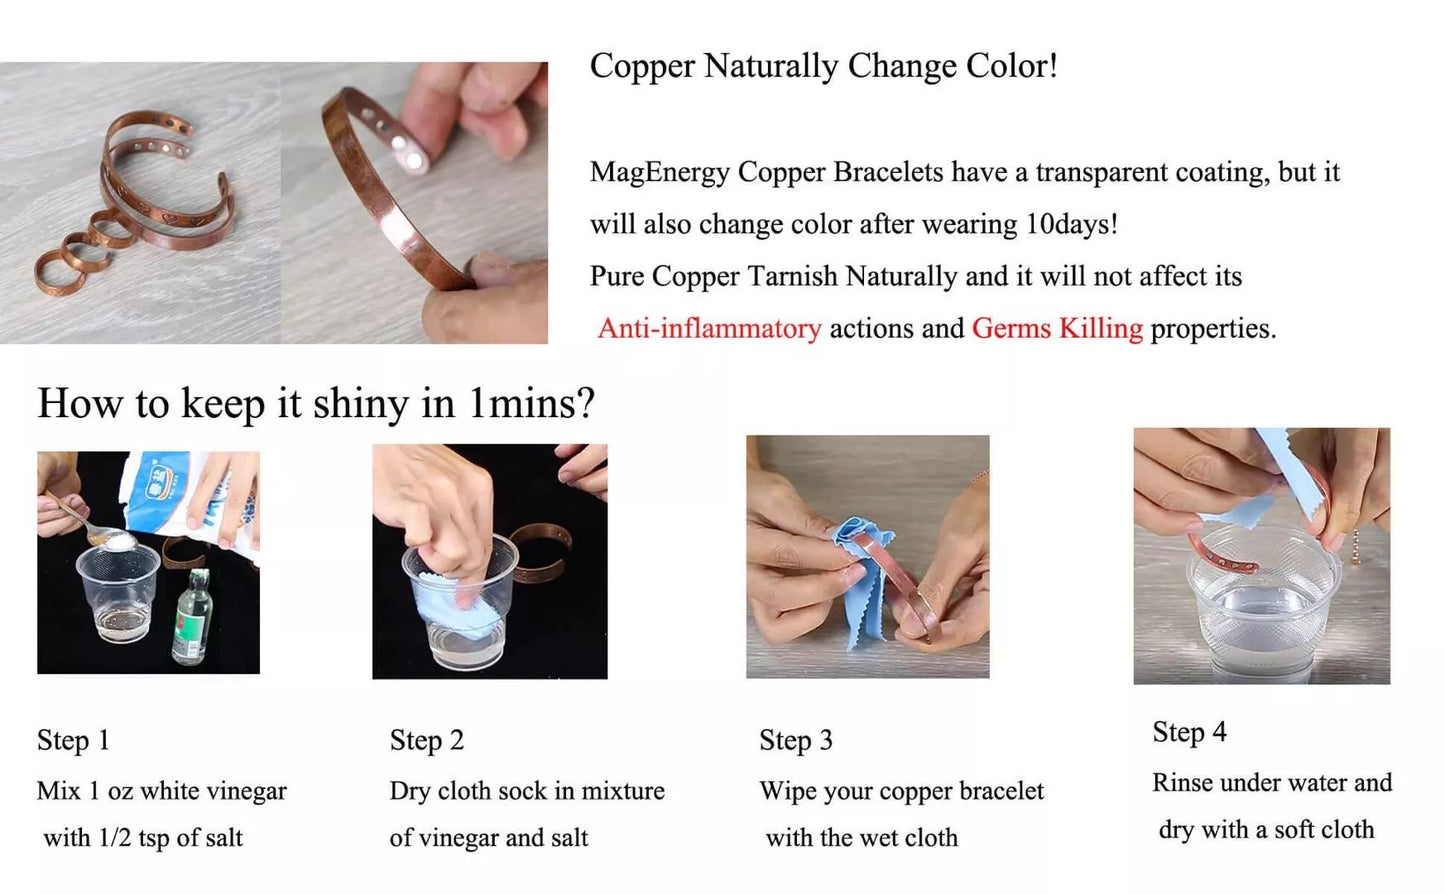 CB595 100% Pure Copper Linked 5 Elements Magnetic Bracelet 210 x150mm